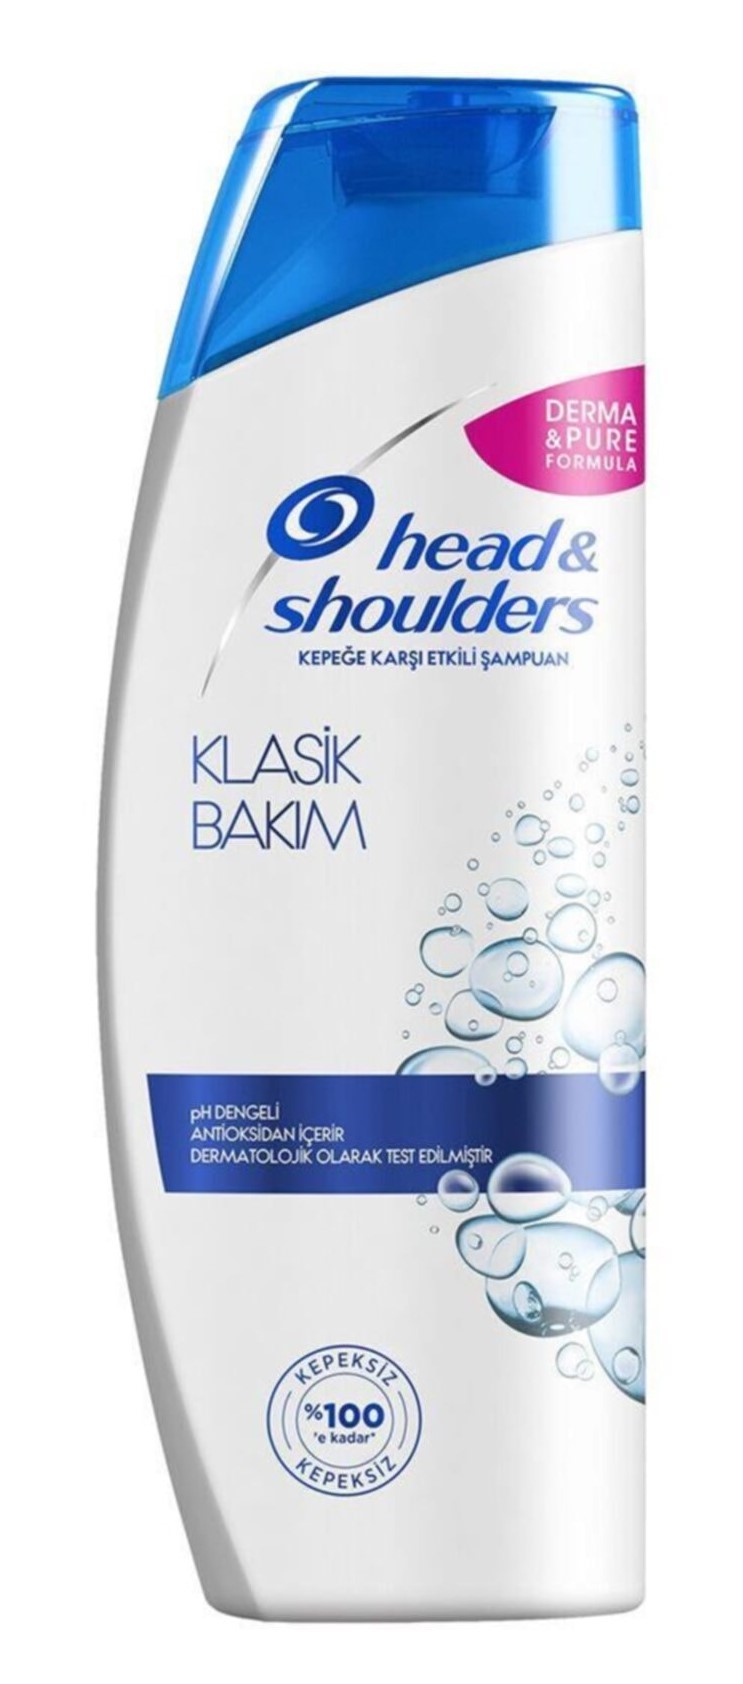 Head & Shoulders Anti-Dandruff Shampoo for all hair types